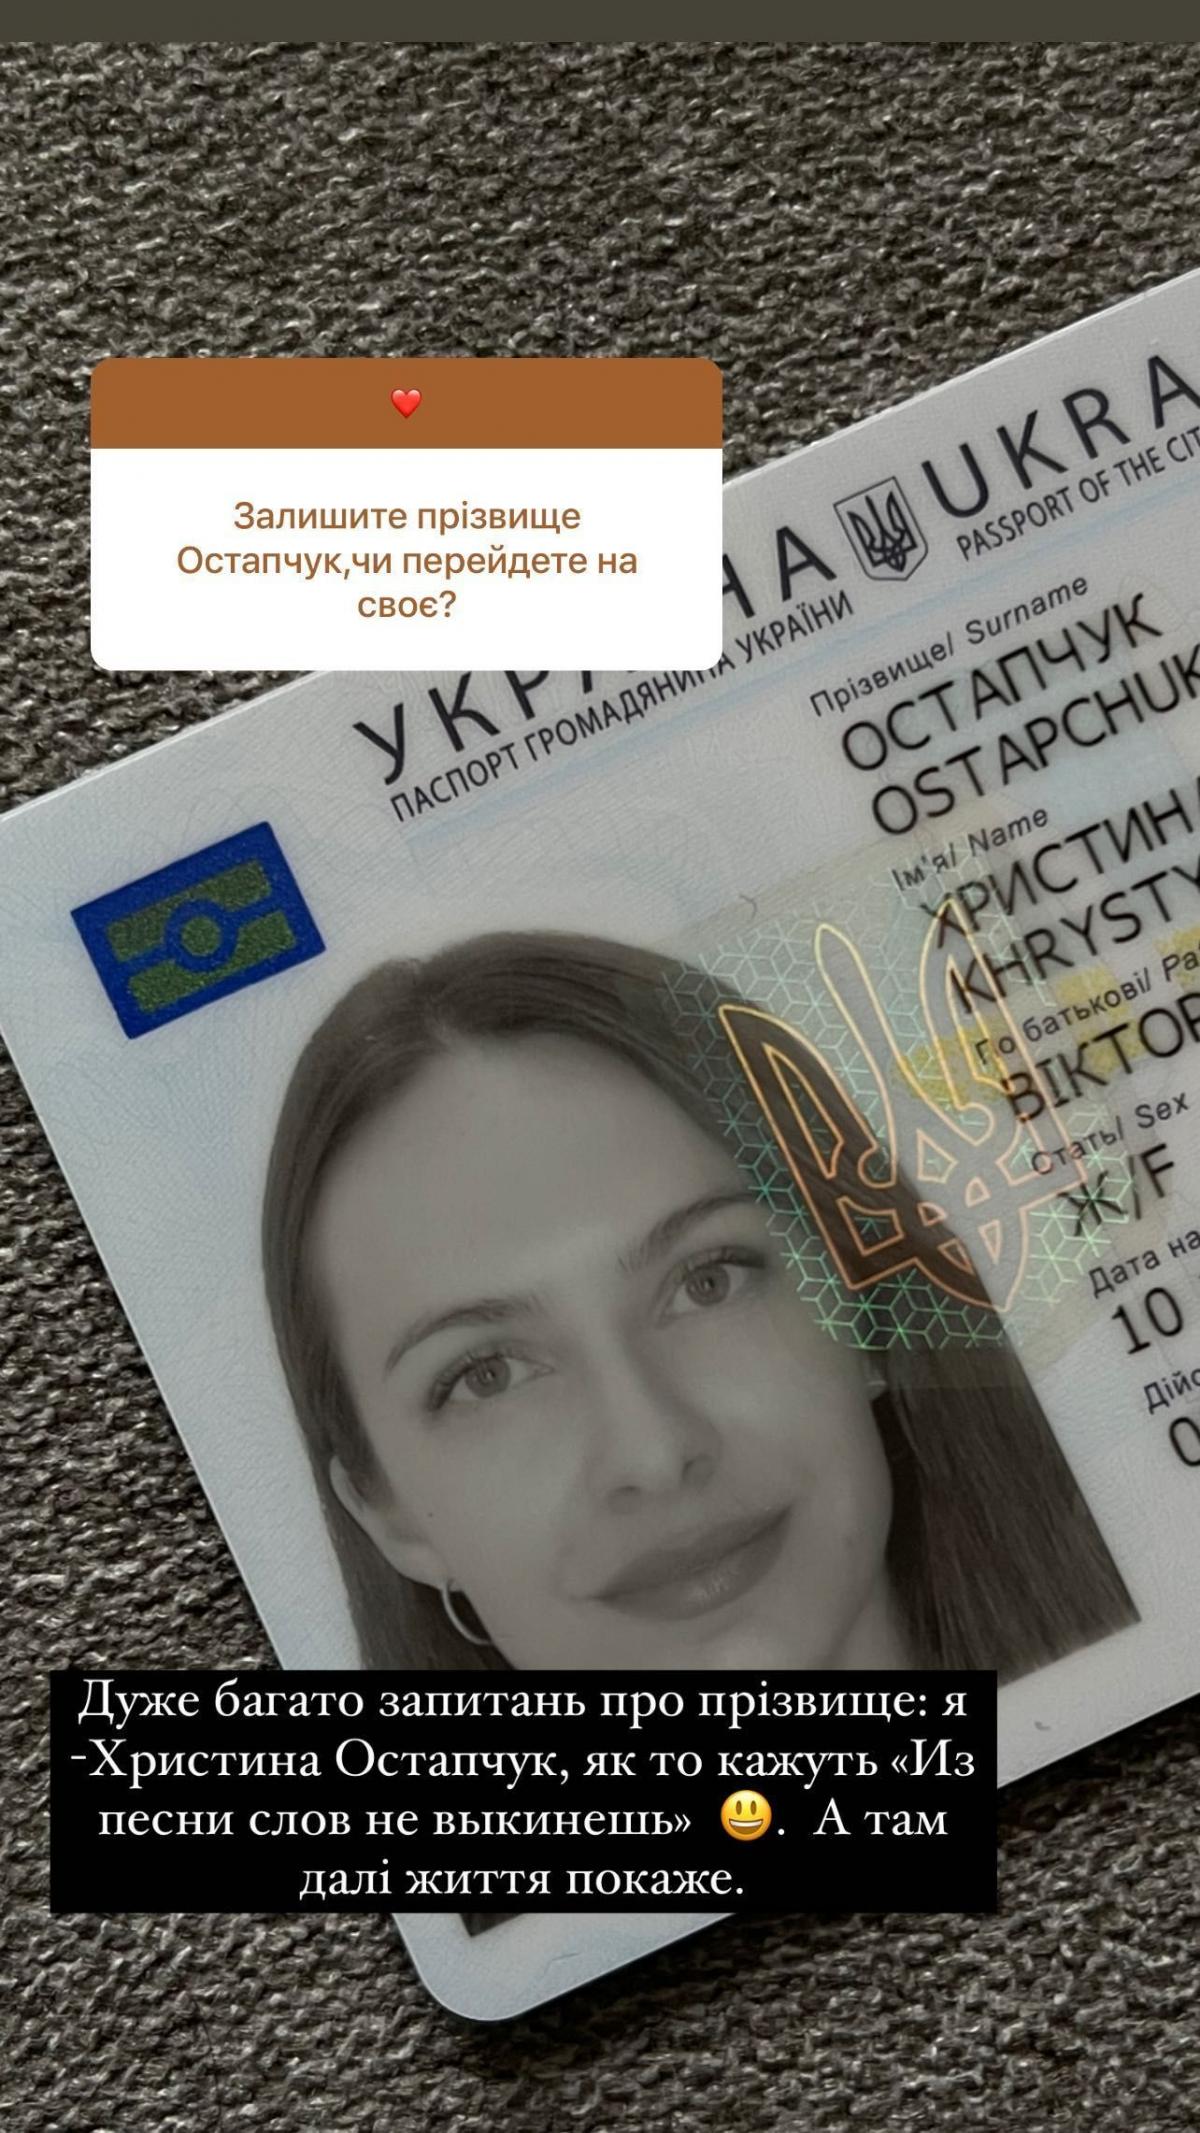 Христина Остапчук показала фото паспорта / скріншот